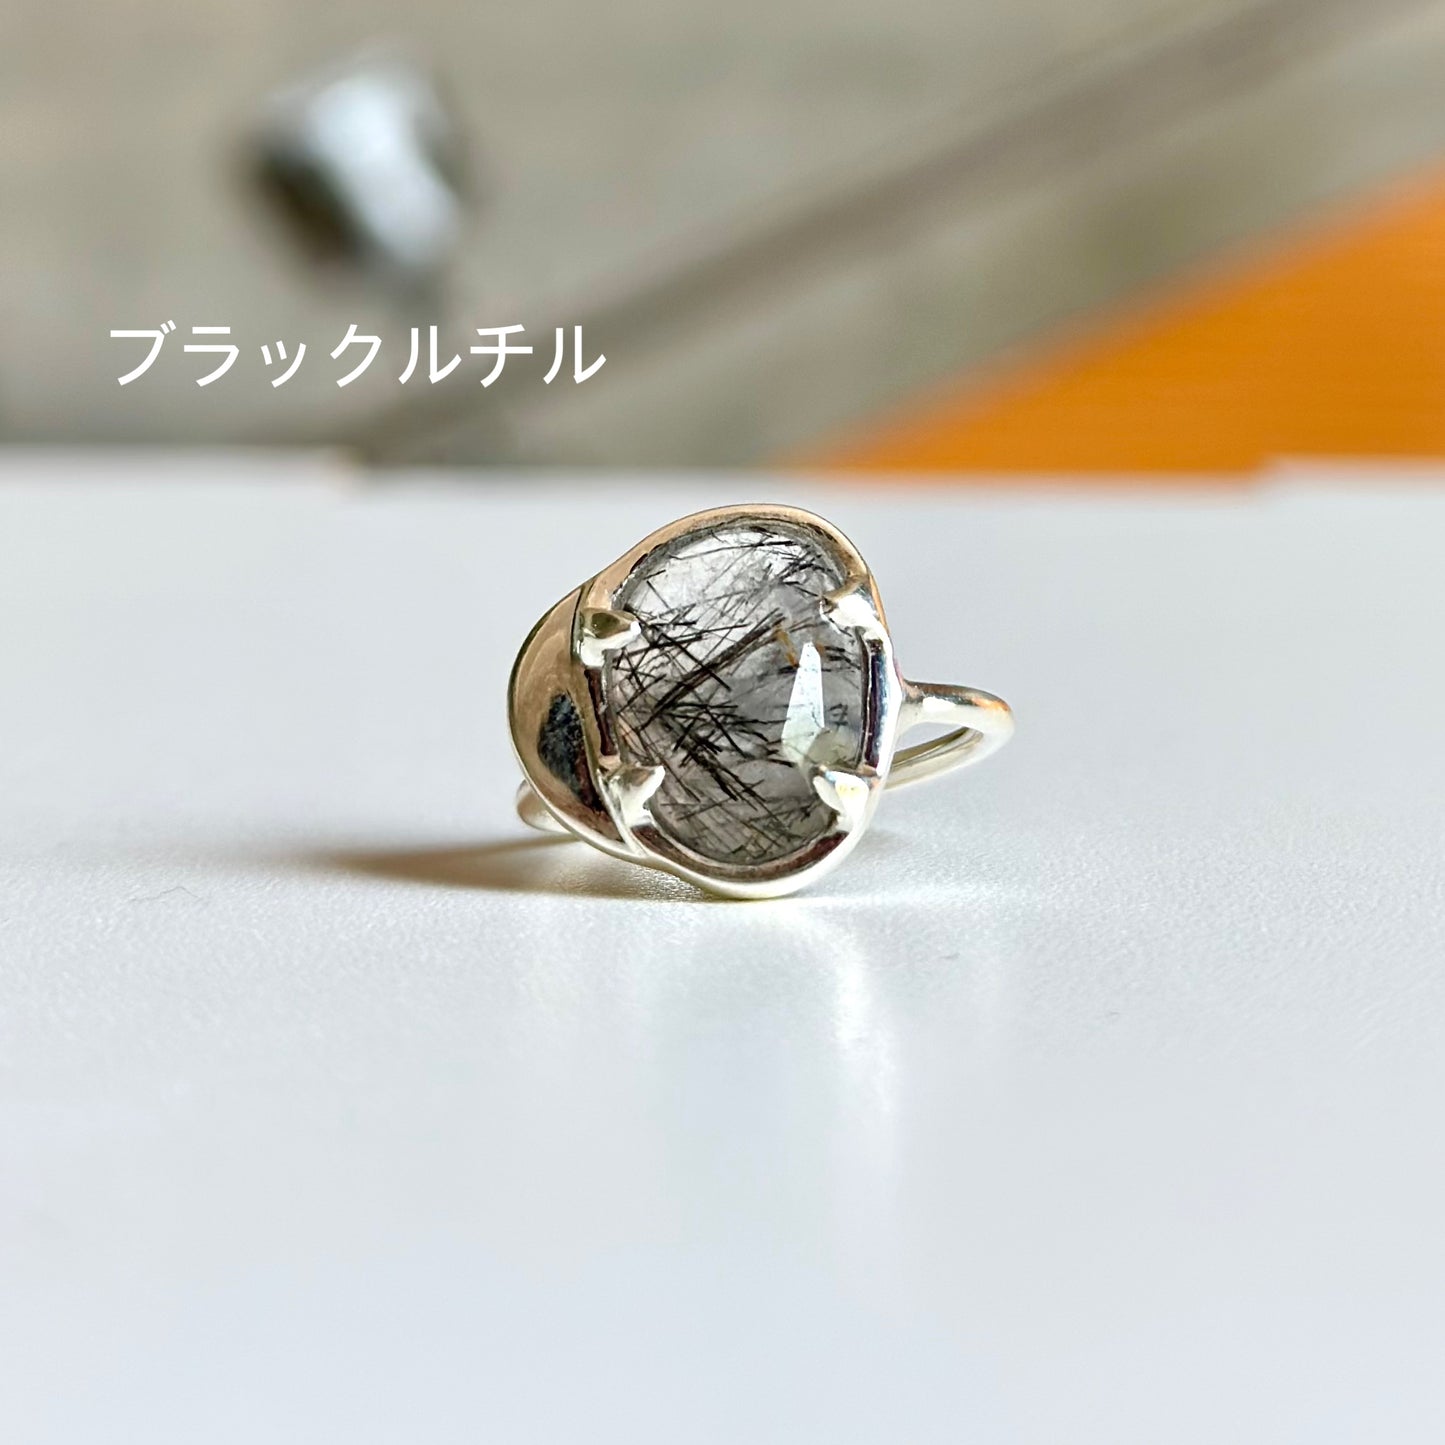 Silver925 design ring 18